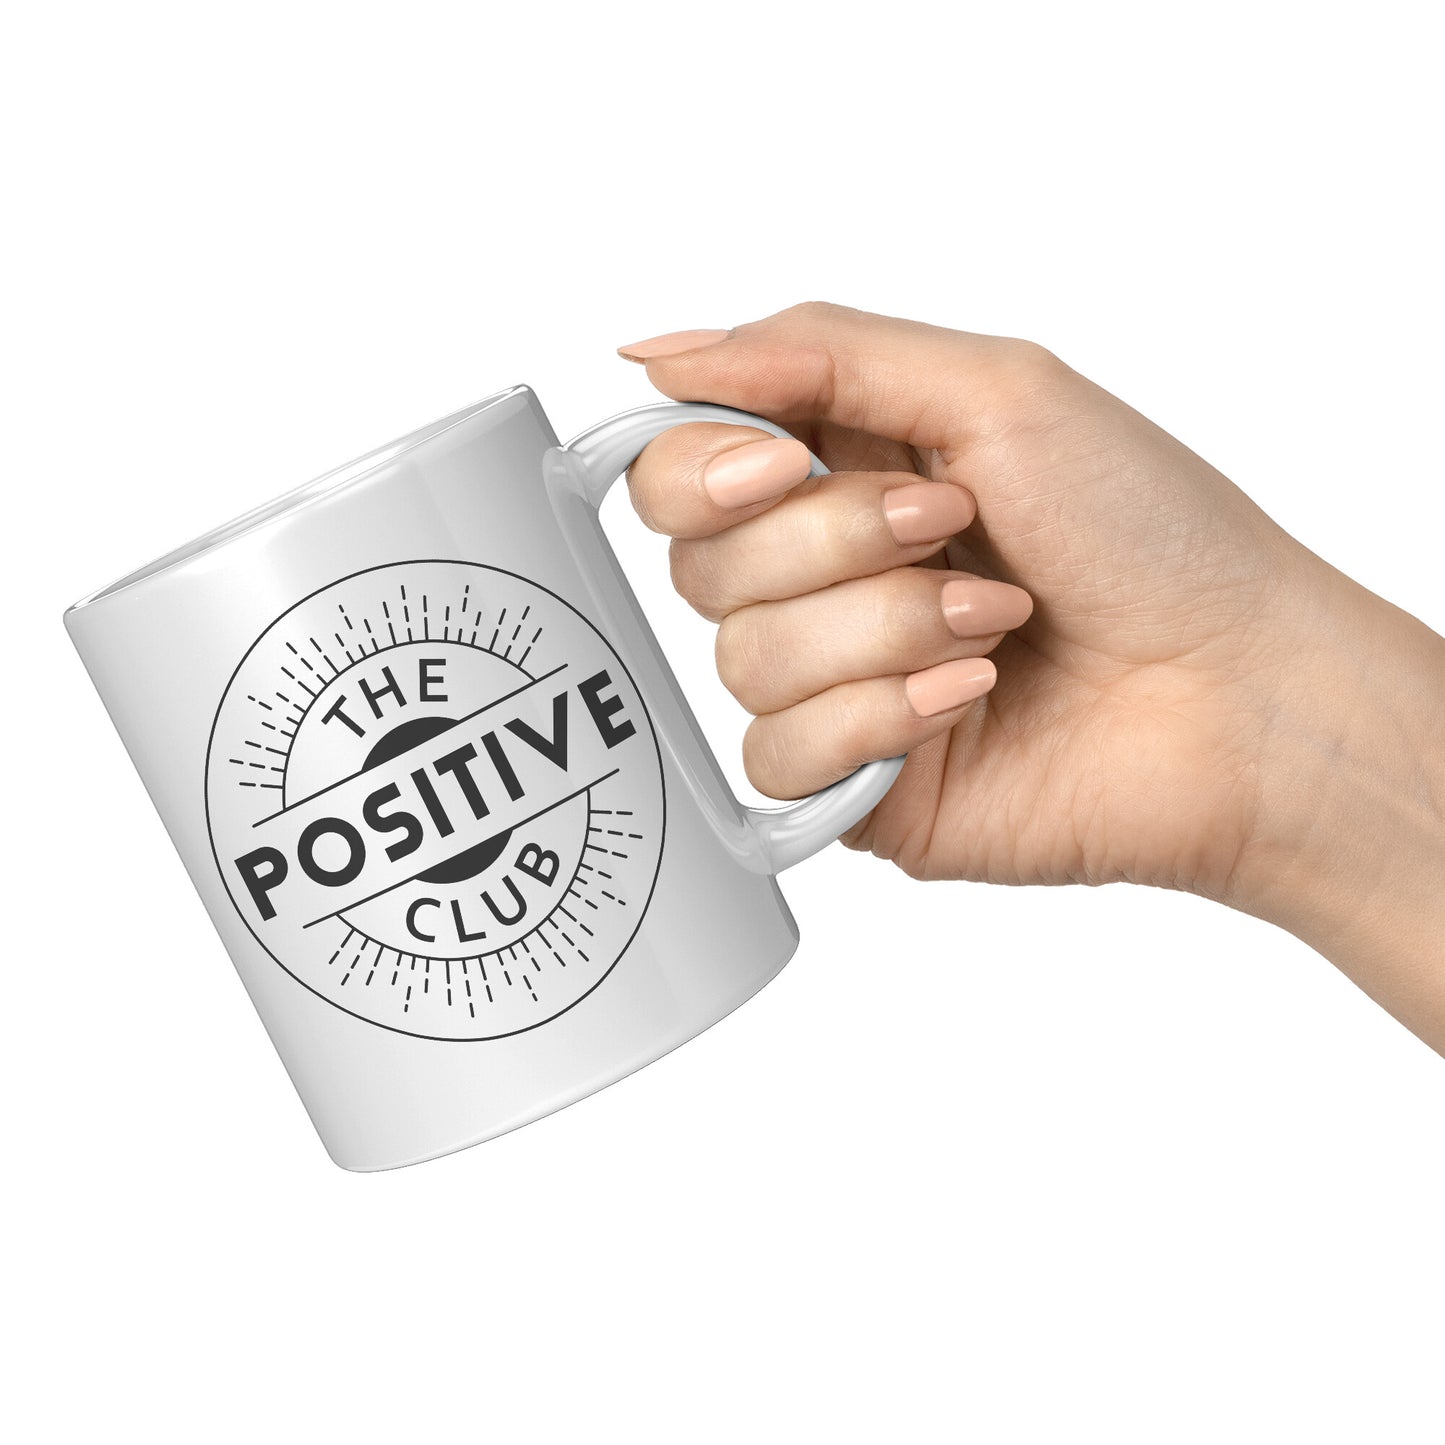 11oz White Mug Black Logo The Positive Club ( Free Shipping )